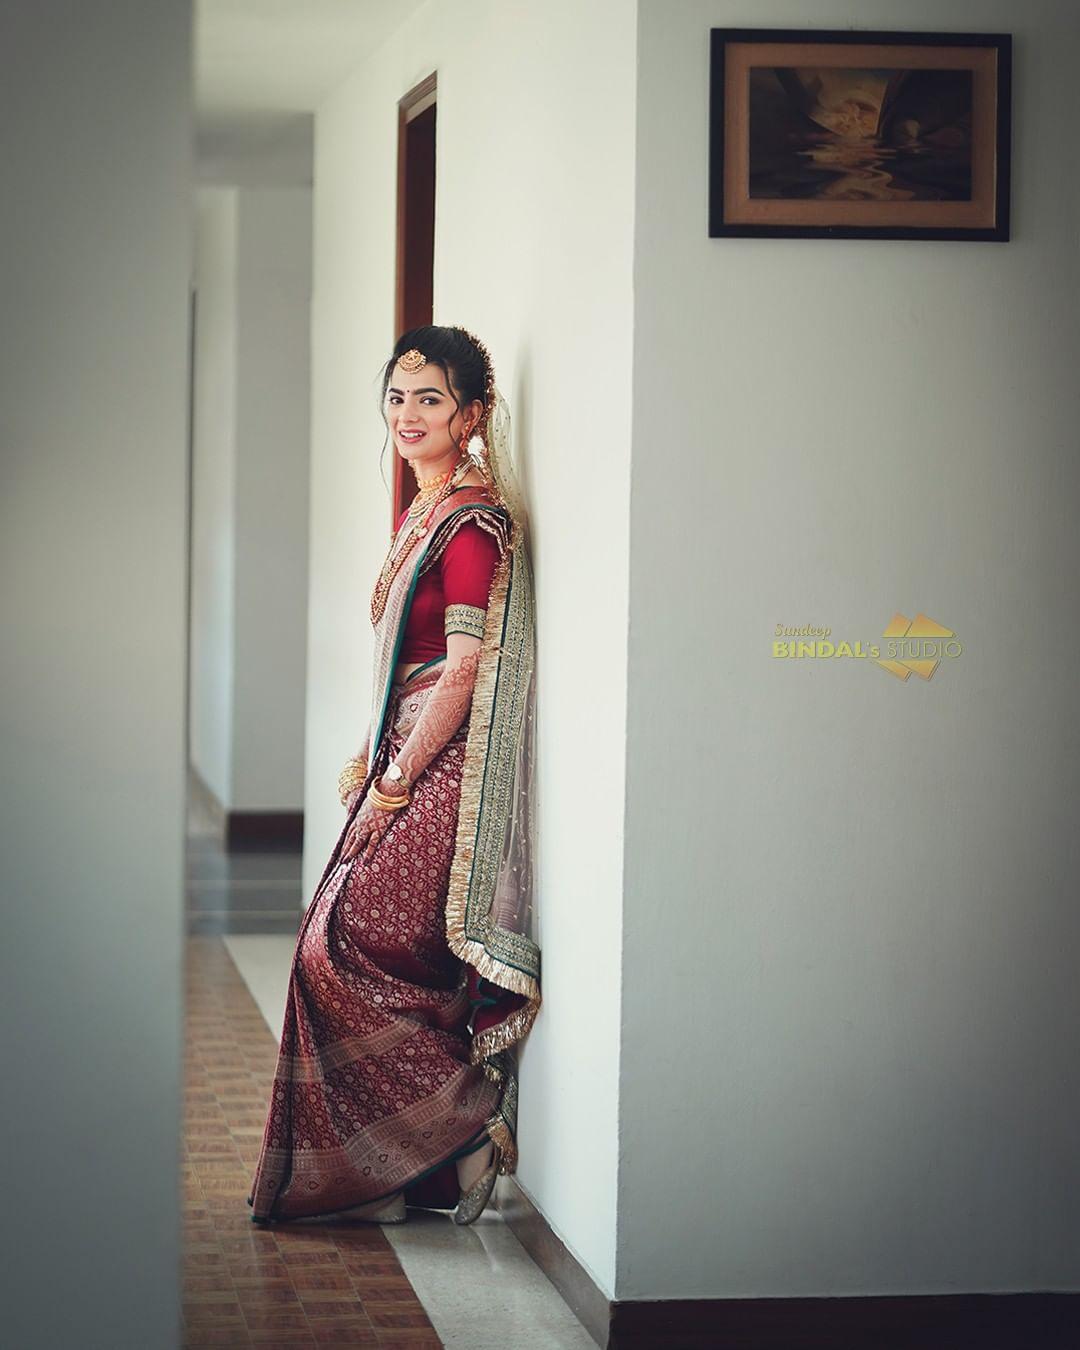 Saranya looks ravishing as she poses in a saree during a photoshoot.